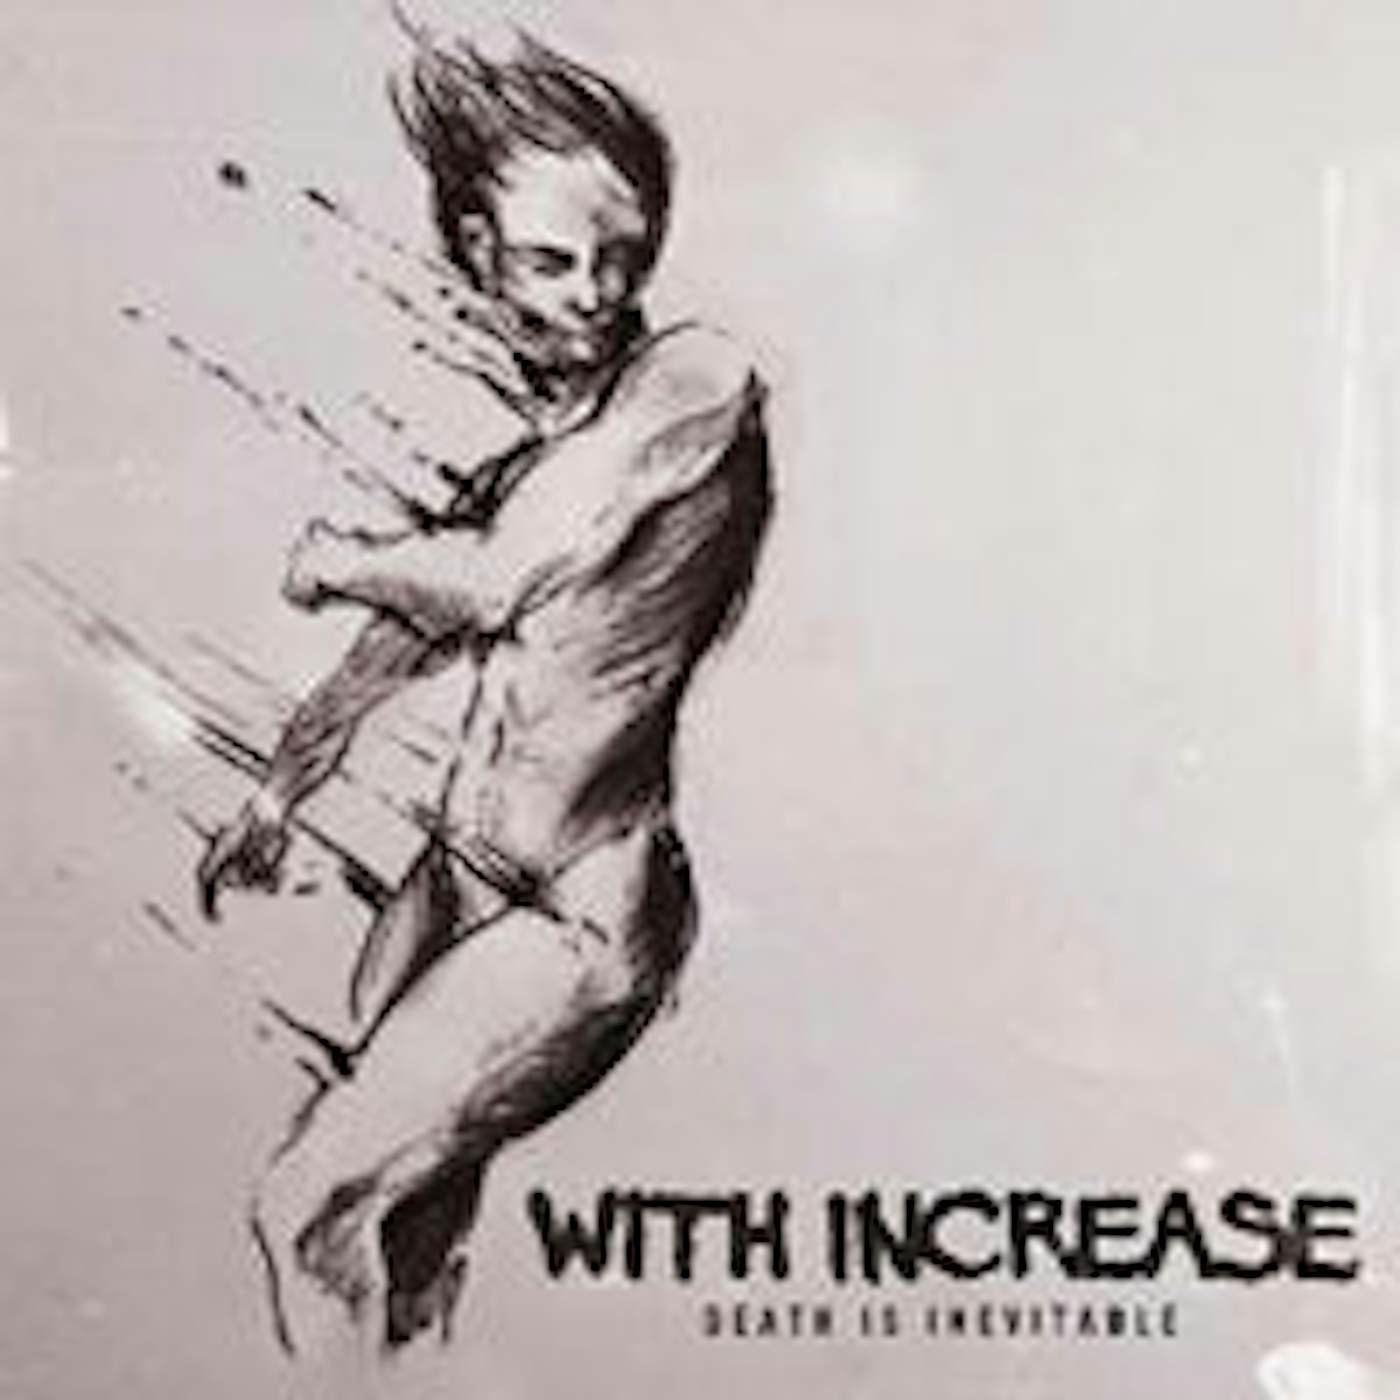 With Increase LP - Death Is Inevitable (Vinyl)